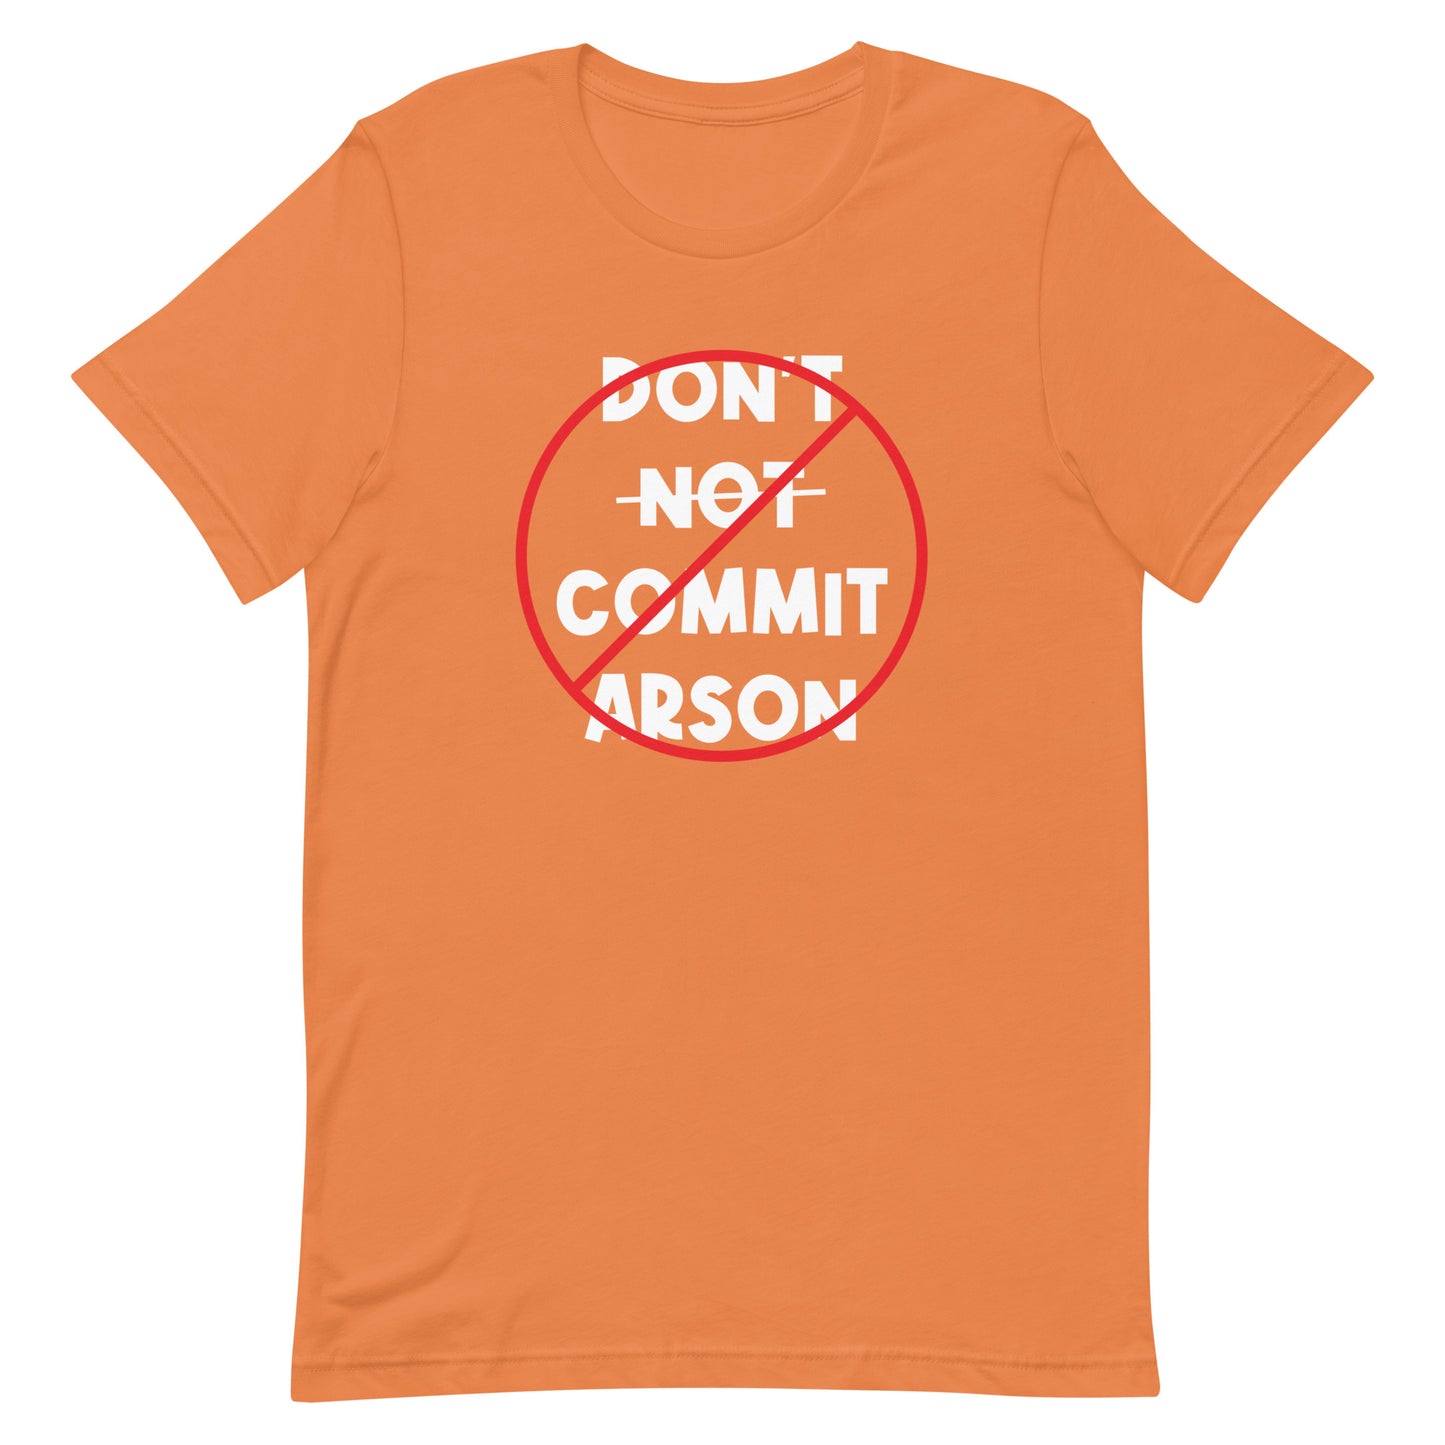 Do Not Don't Not Commit Arson Unisex t-shirt